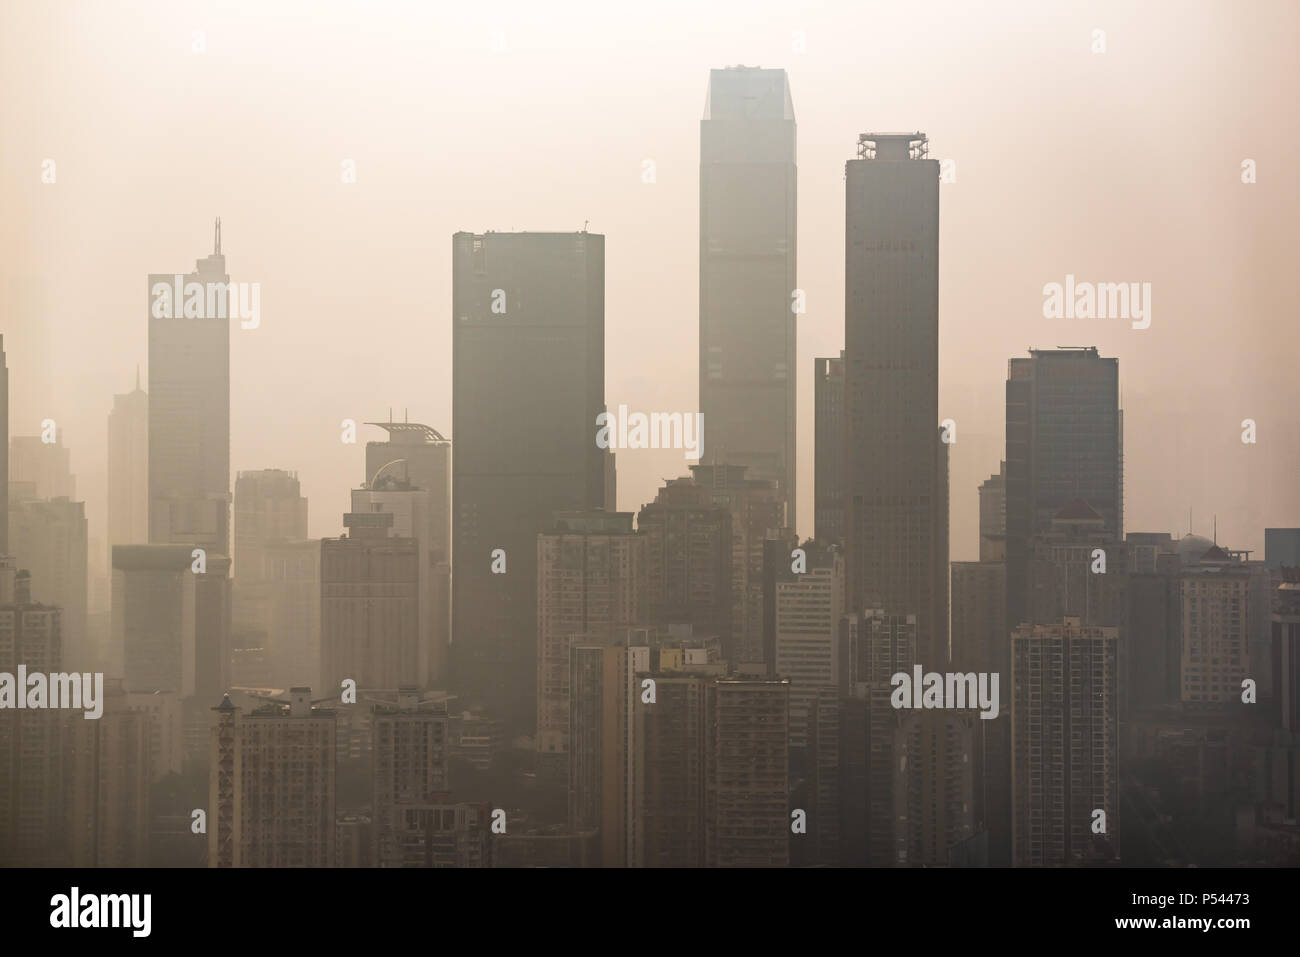 Grande ville avec des gratte-ciel skyline smog en silouhettes Banque D'Images